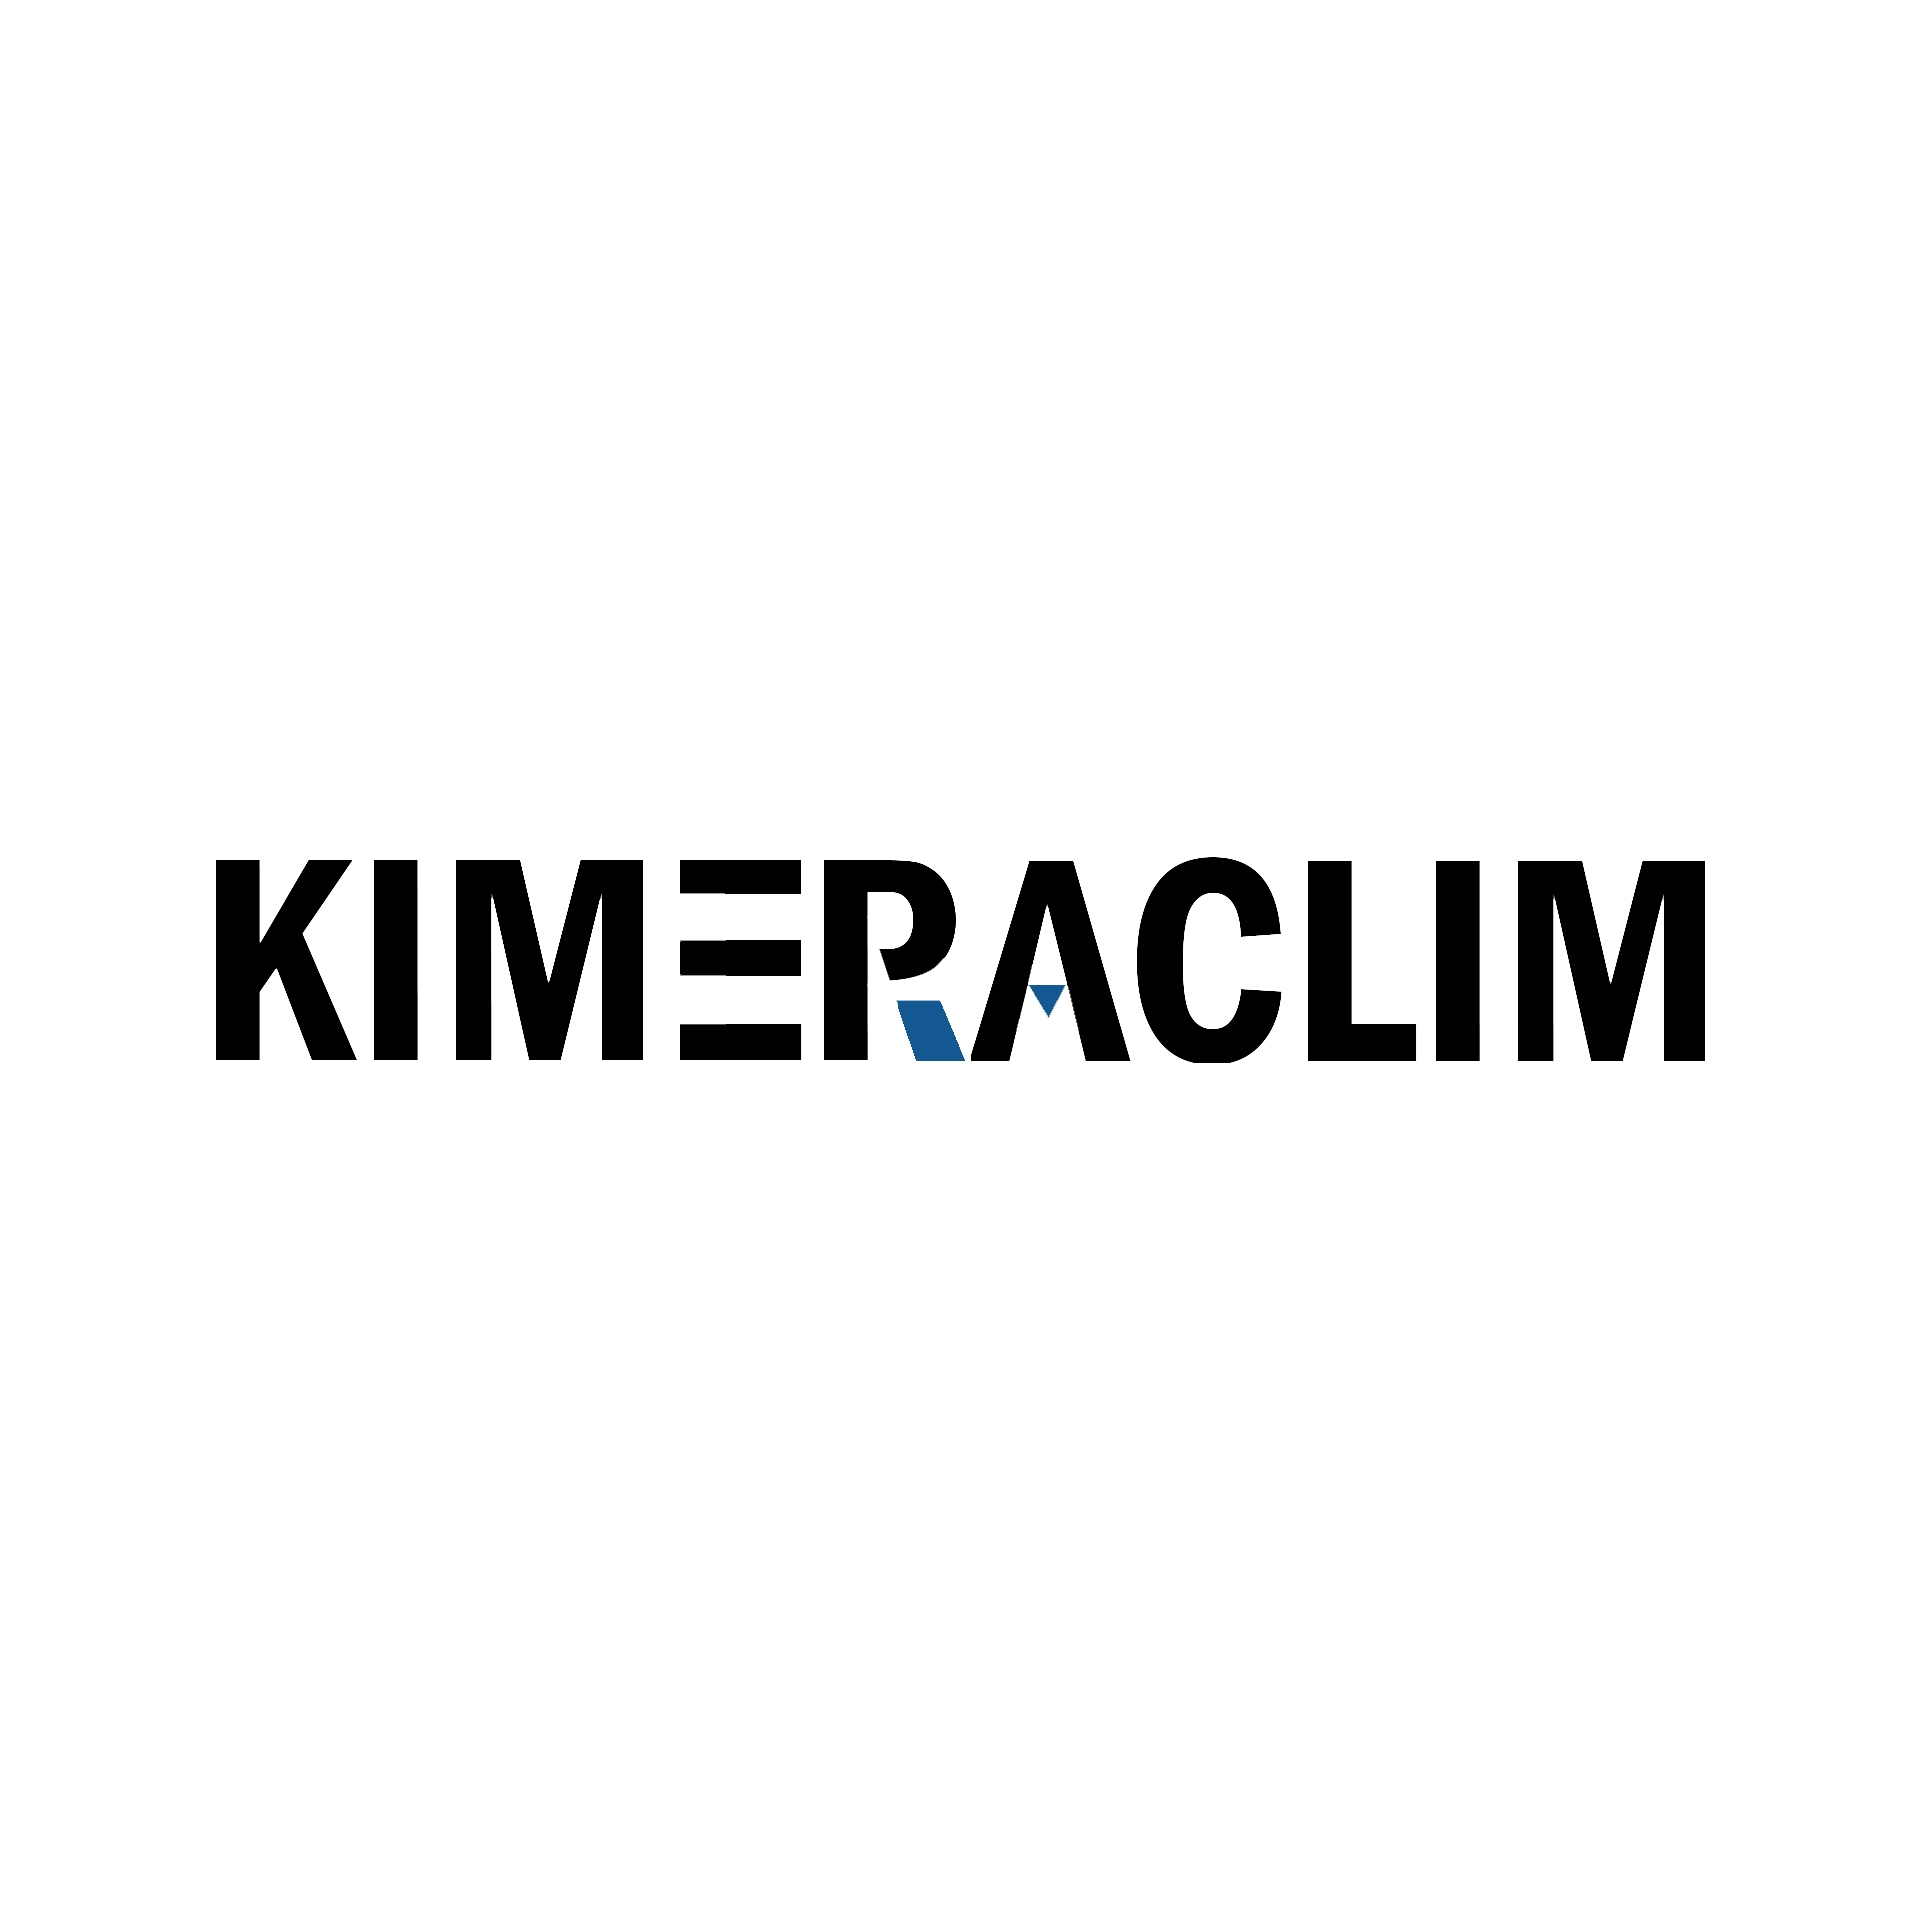 Kimera Climatisation Inc. - Thermopompe, Chauffage, Air climatisé - Entrepreneurs en chauffage